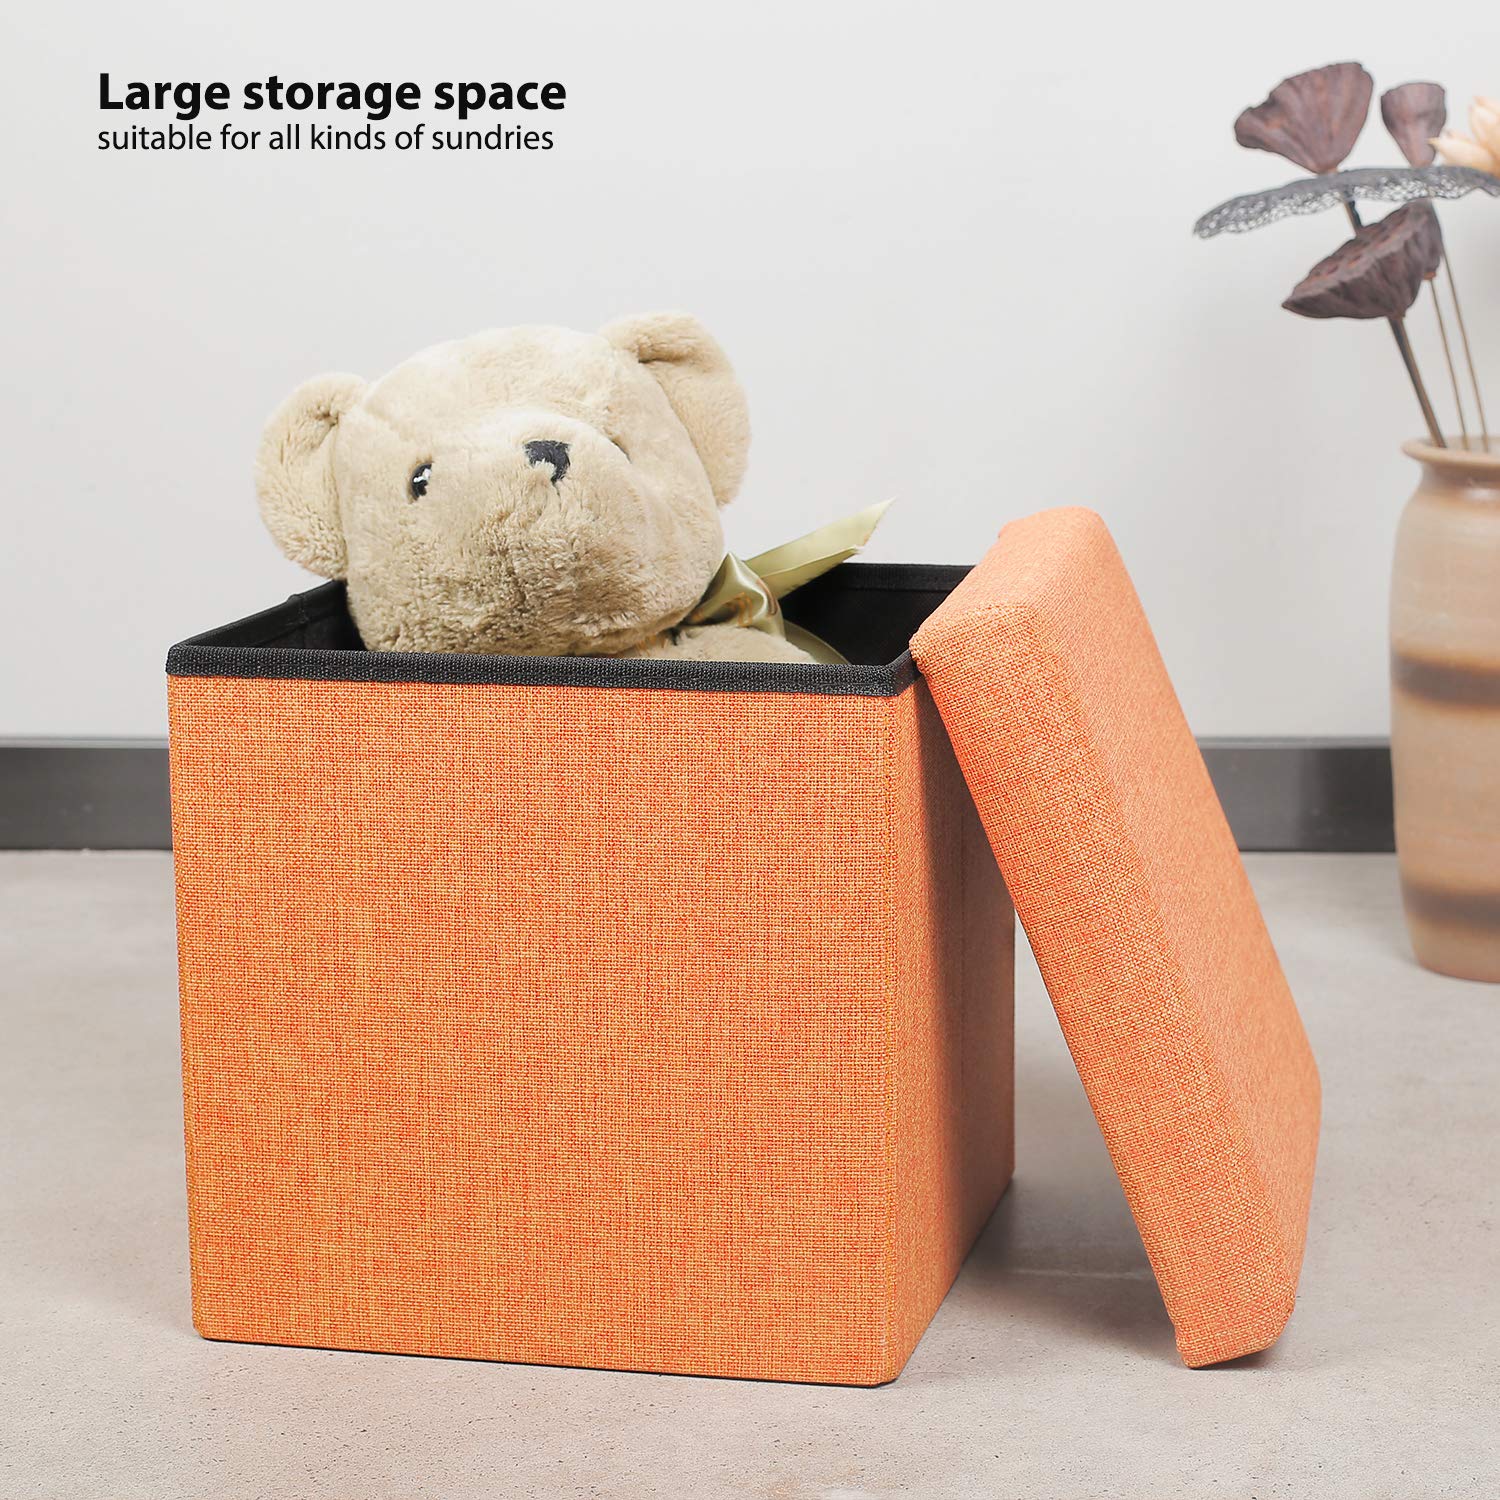 B FSOBEIIALEO Storage Ottoman Cube, Linen Small Foot Seat,for Living Room, Bedroom, Home Office, Dorm Storage Footrest Orange 11.8"x11.8"x11.8"